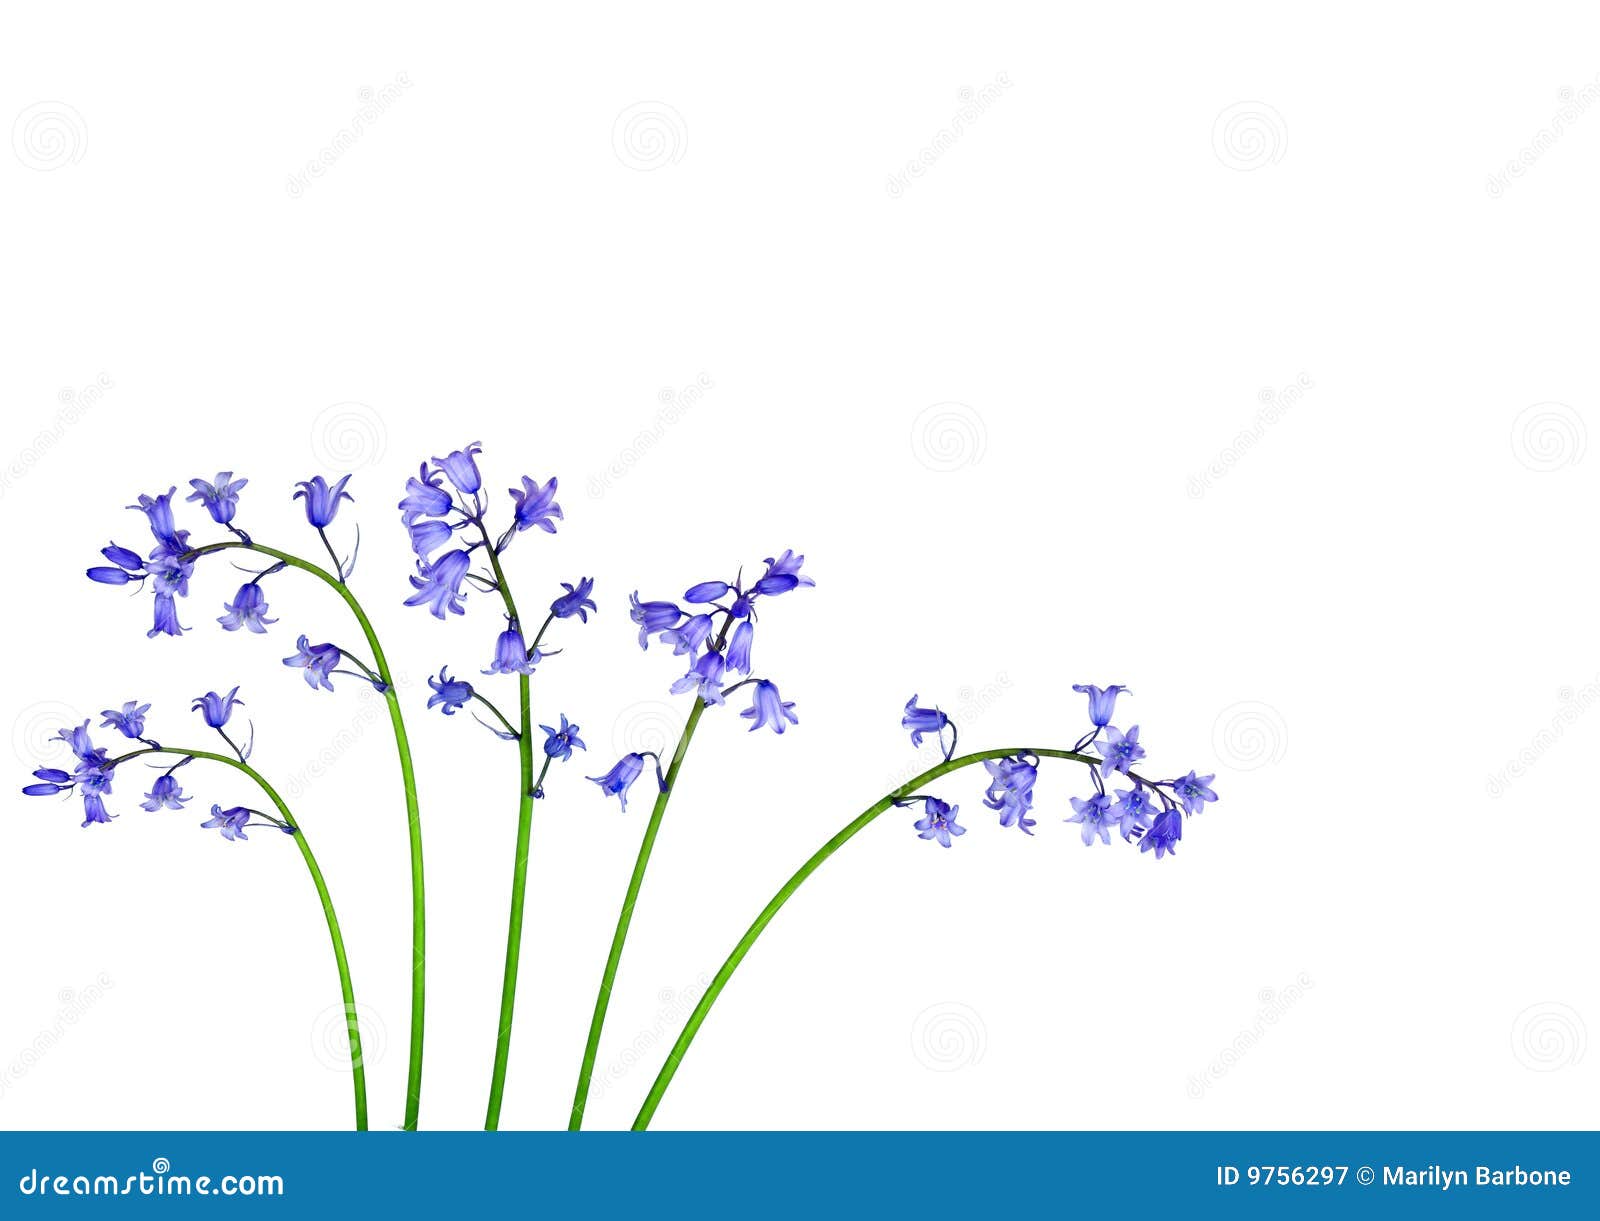 bluebell flower beauty